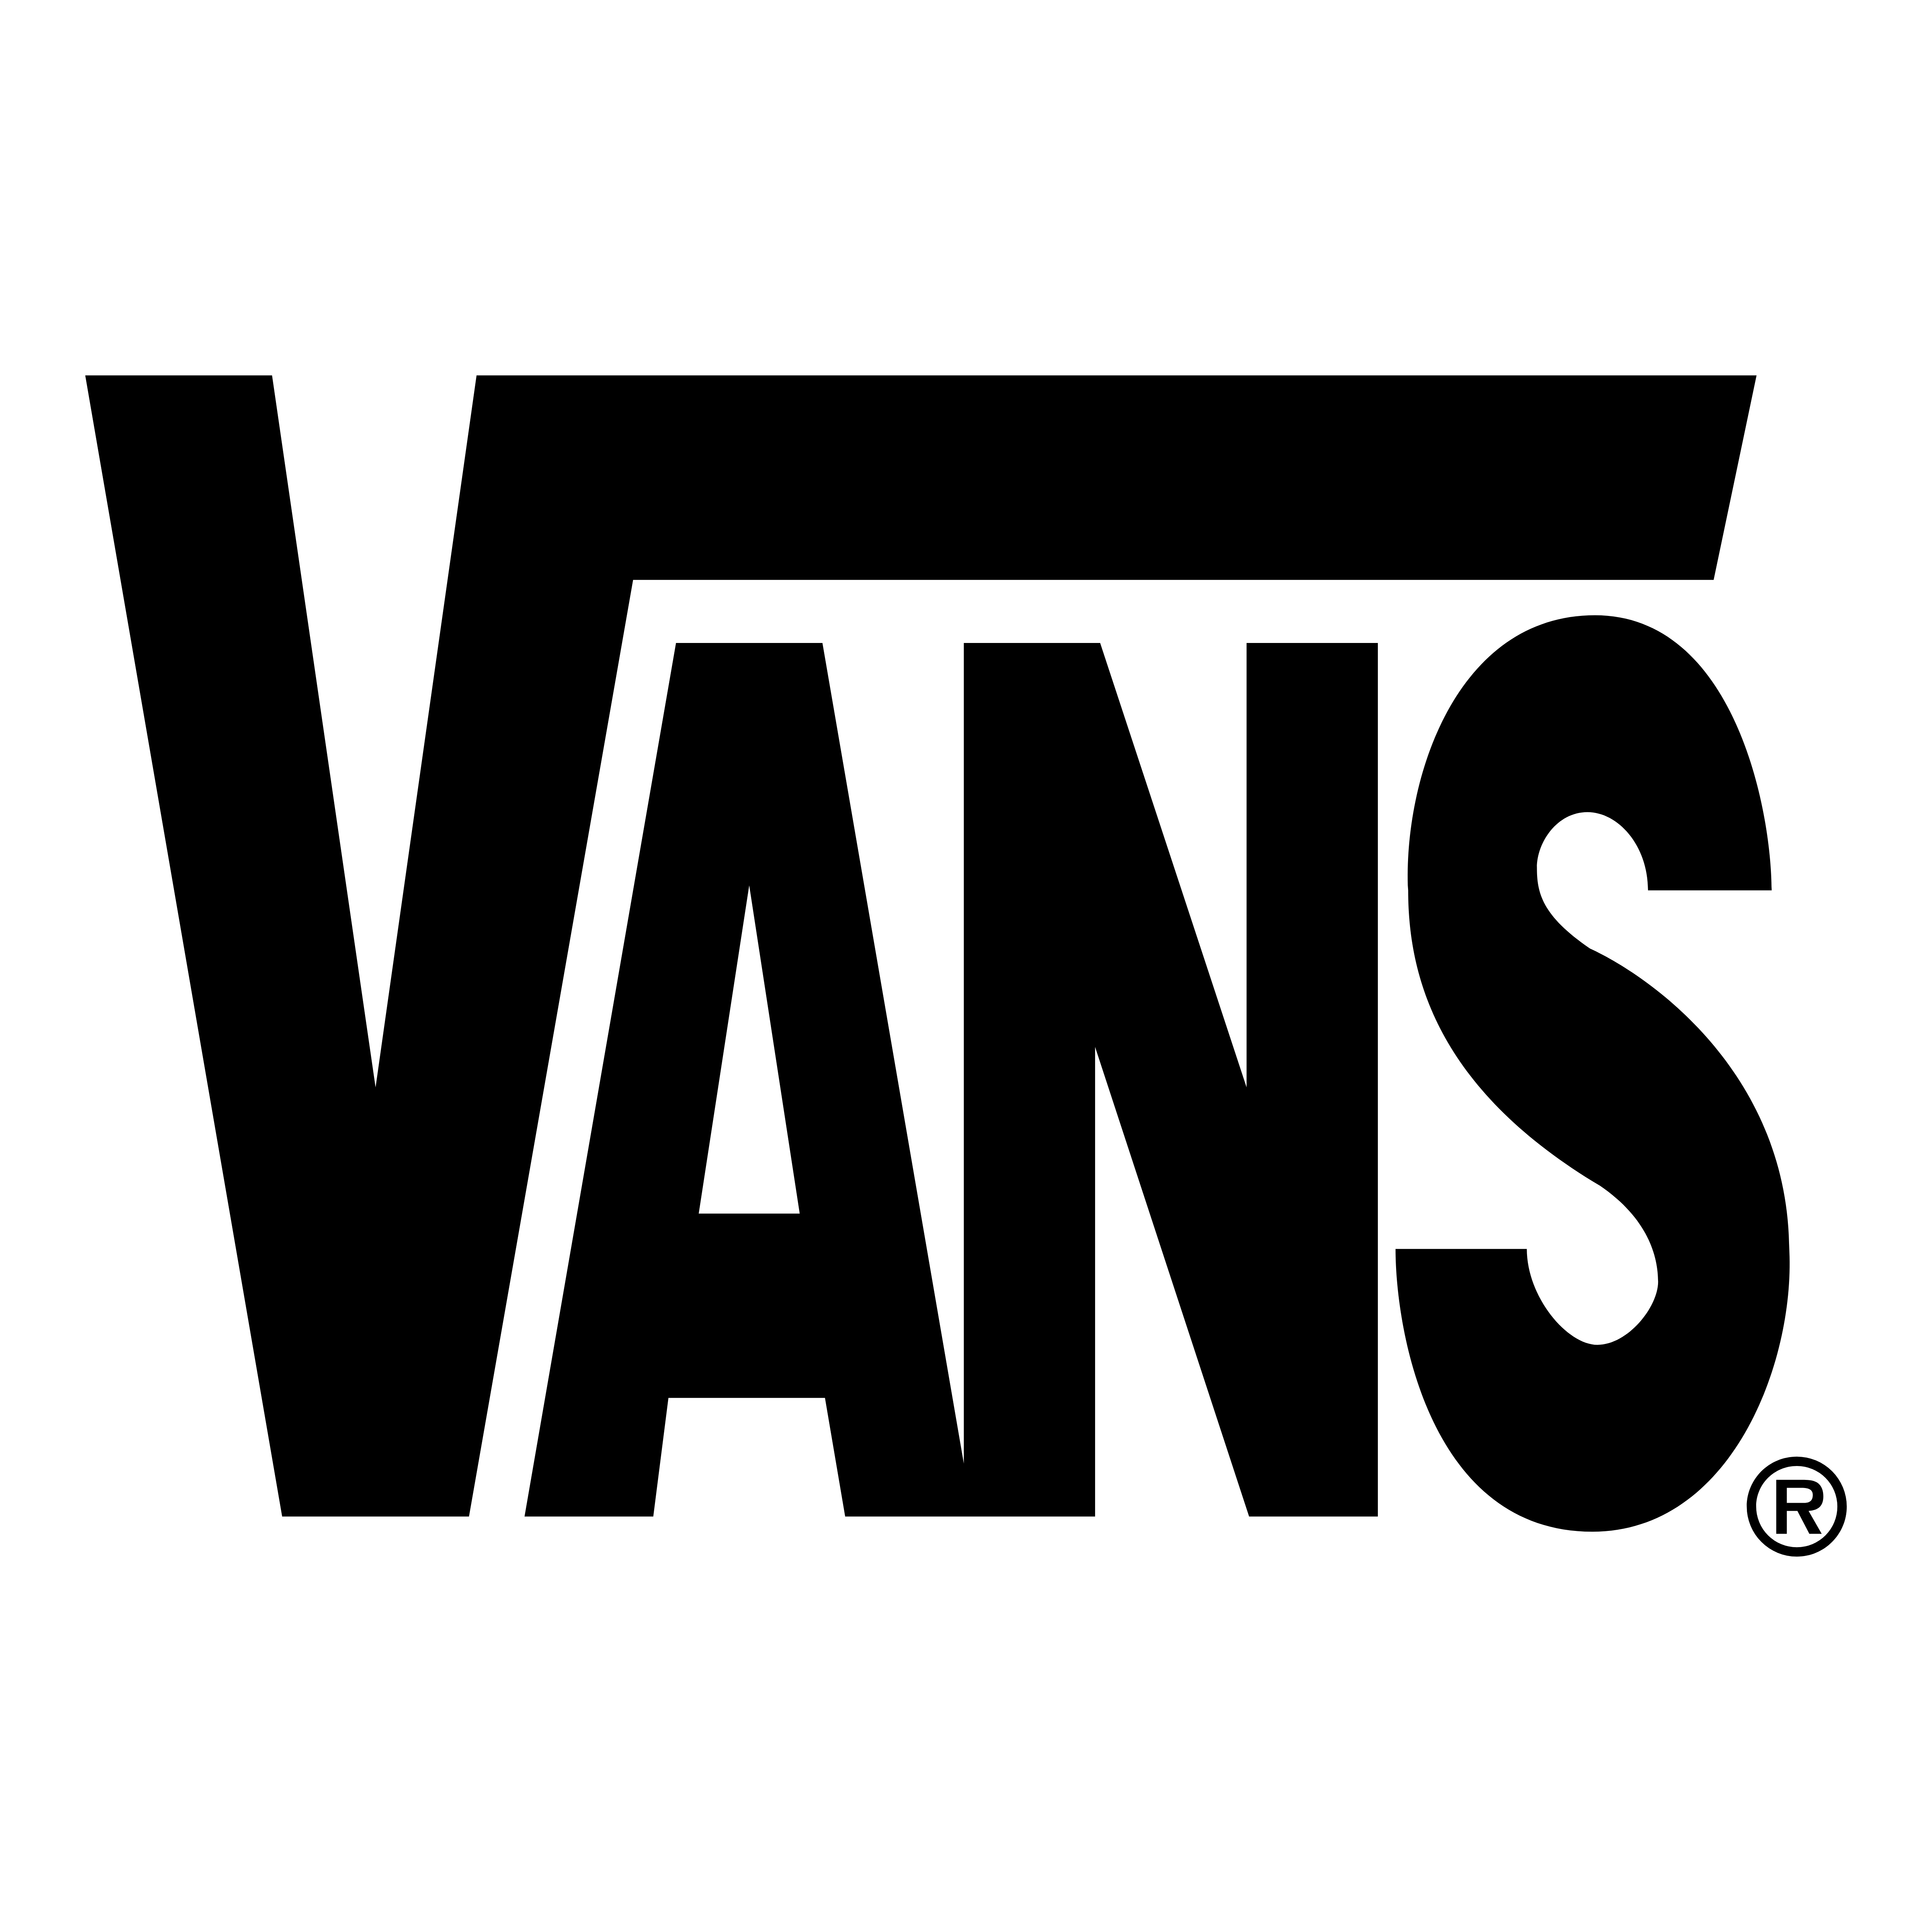 black vans with logo